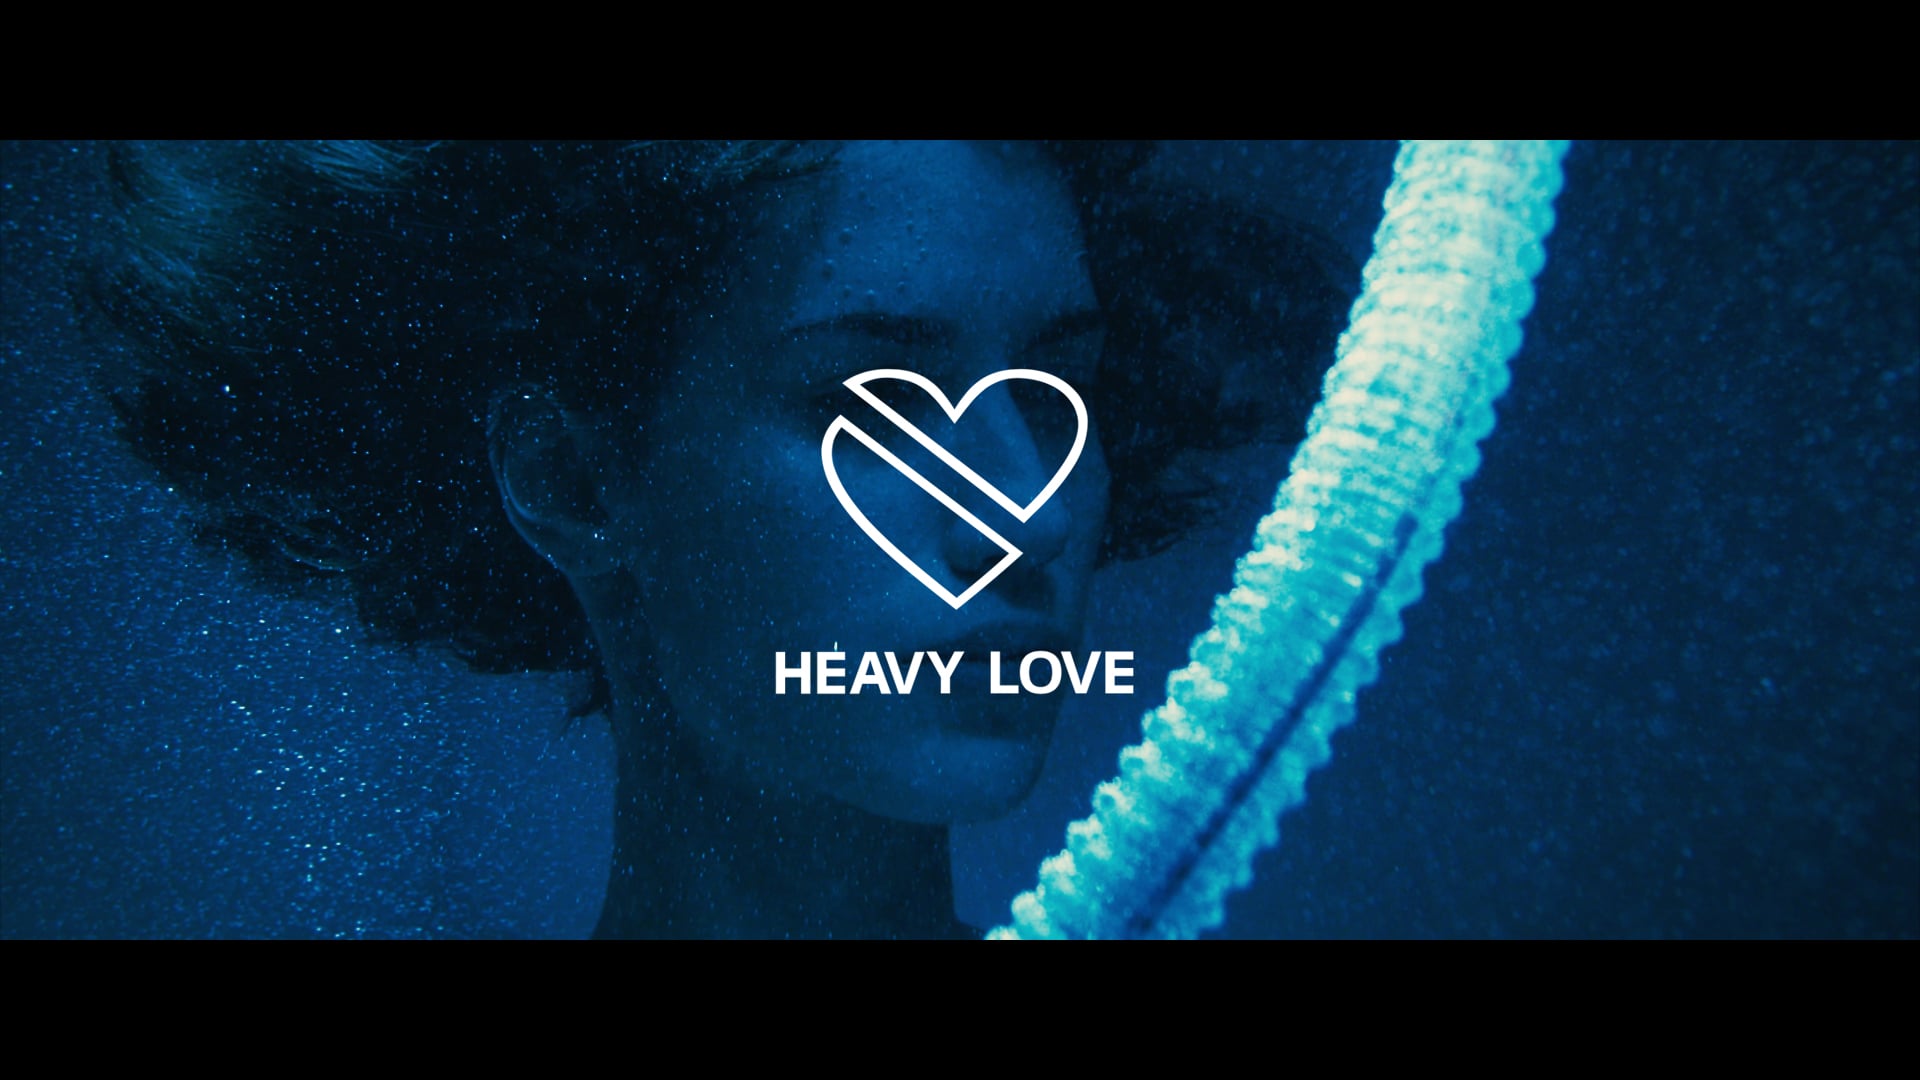 Heavy Love [] The Power Of Love [teaser]